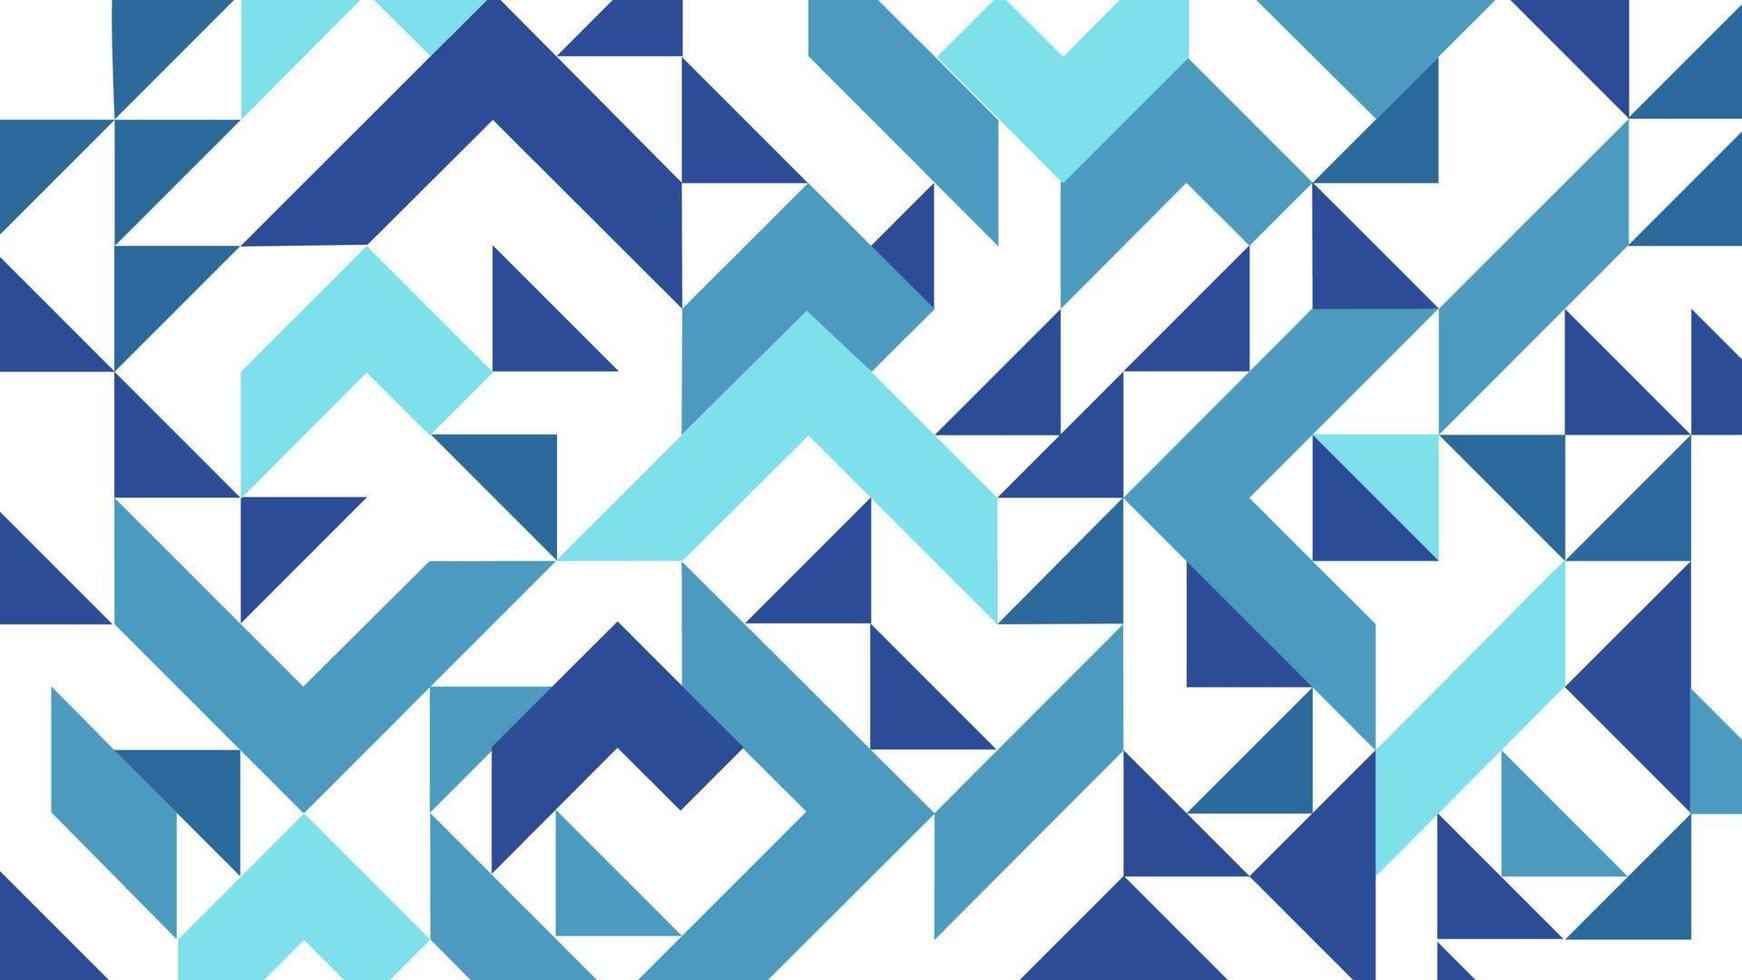 Modern blue geometric design vector background